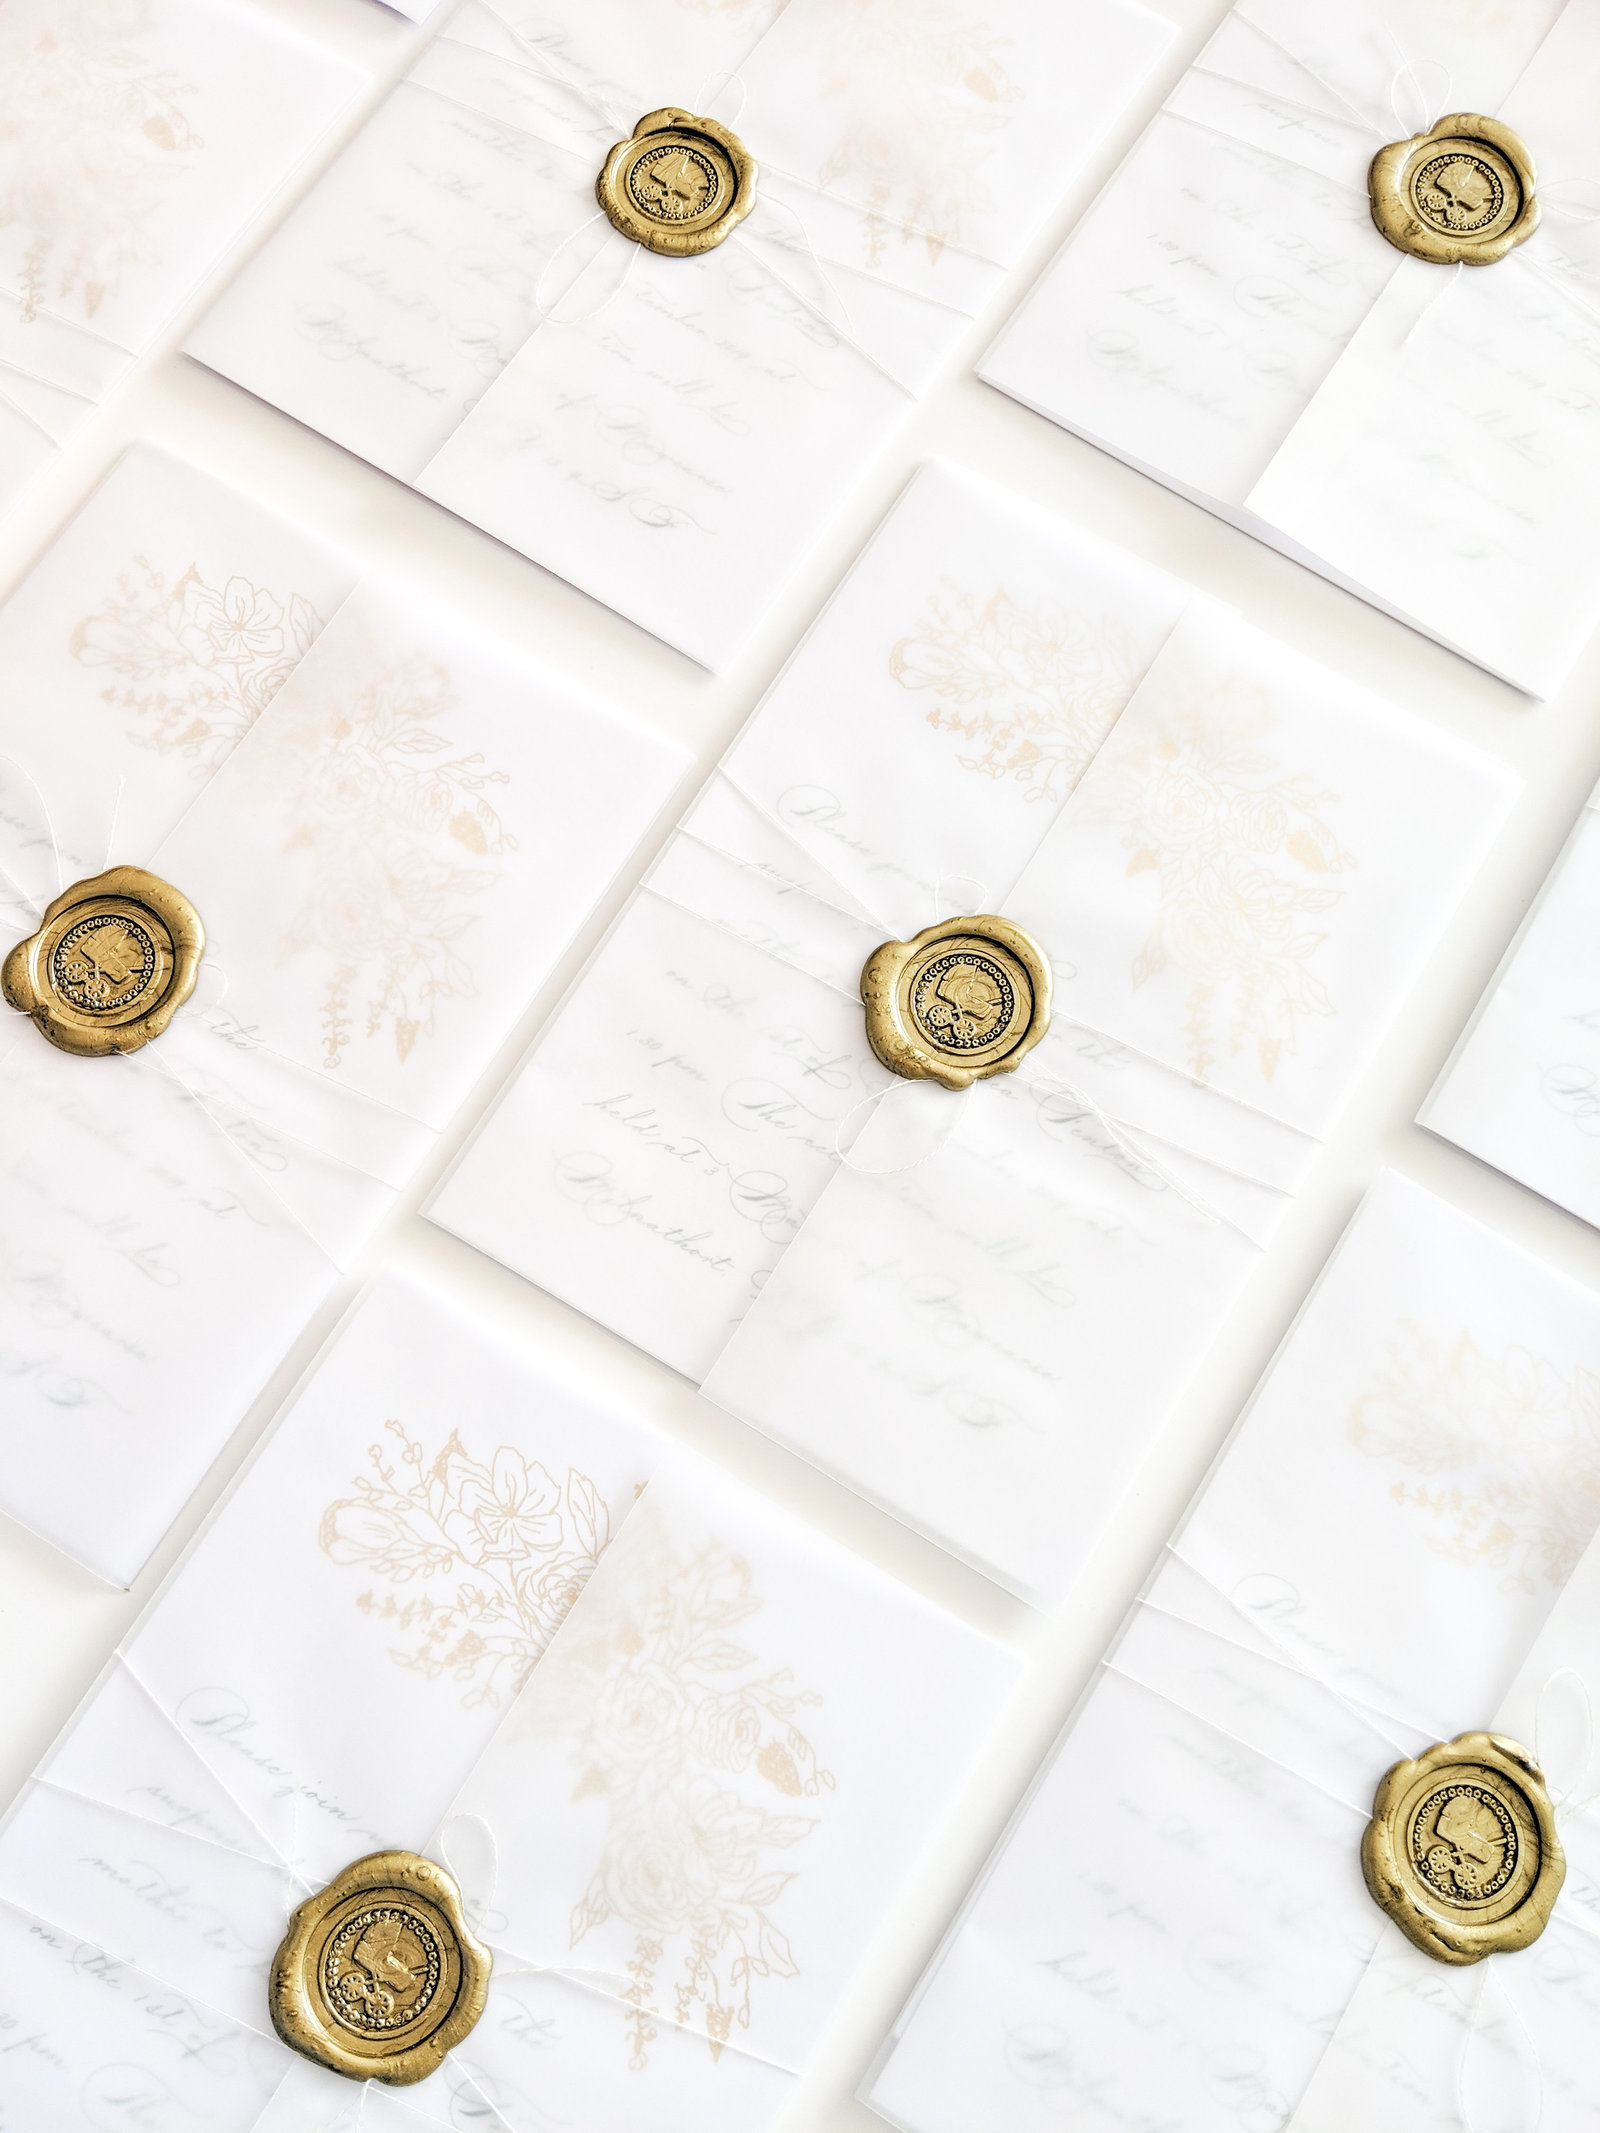 Wax seal and vellum wraps around Scottish wedding invitations